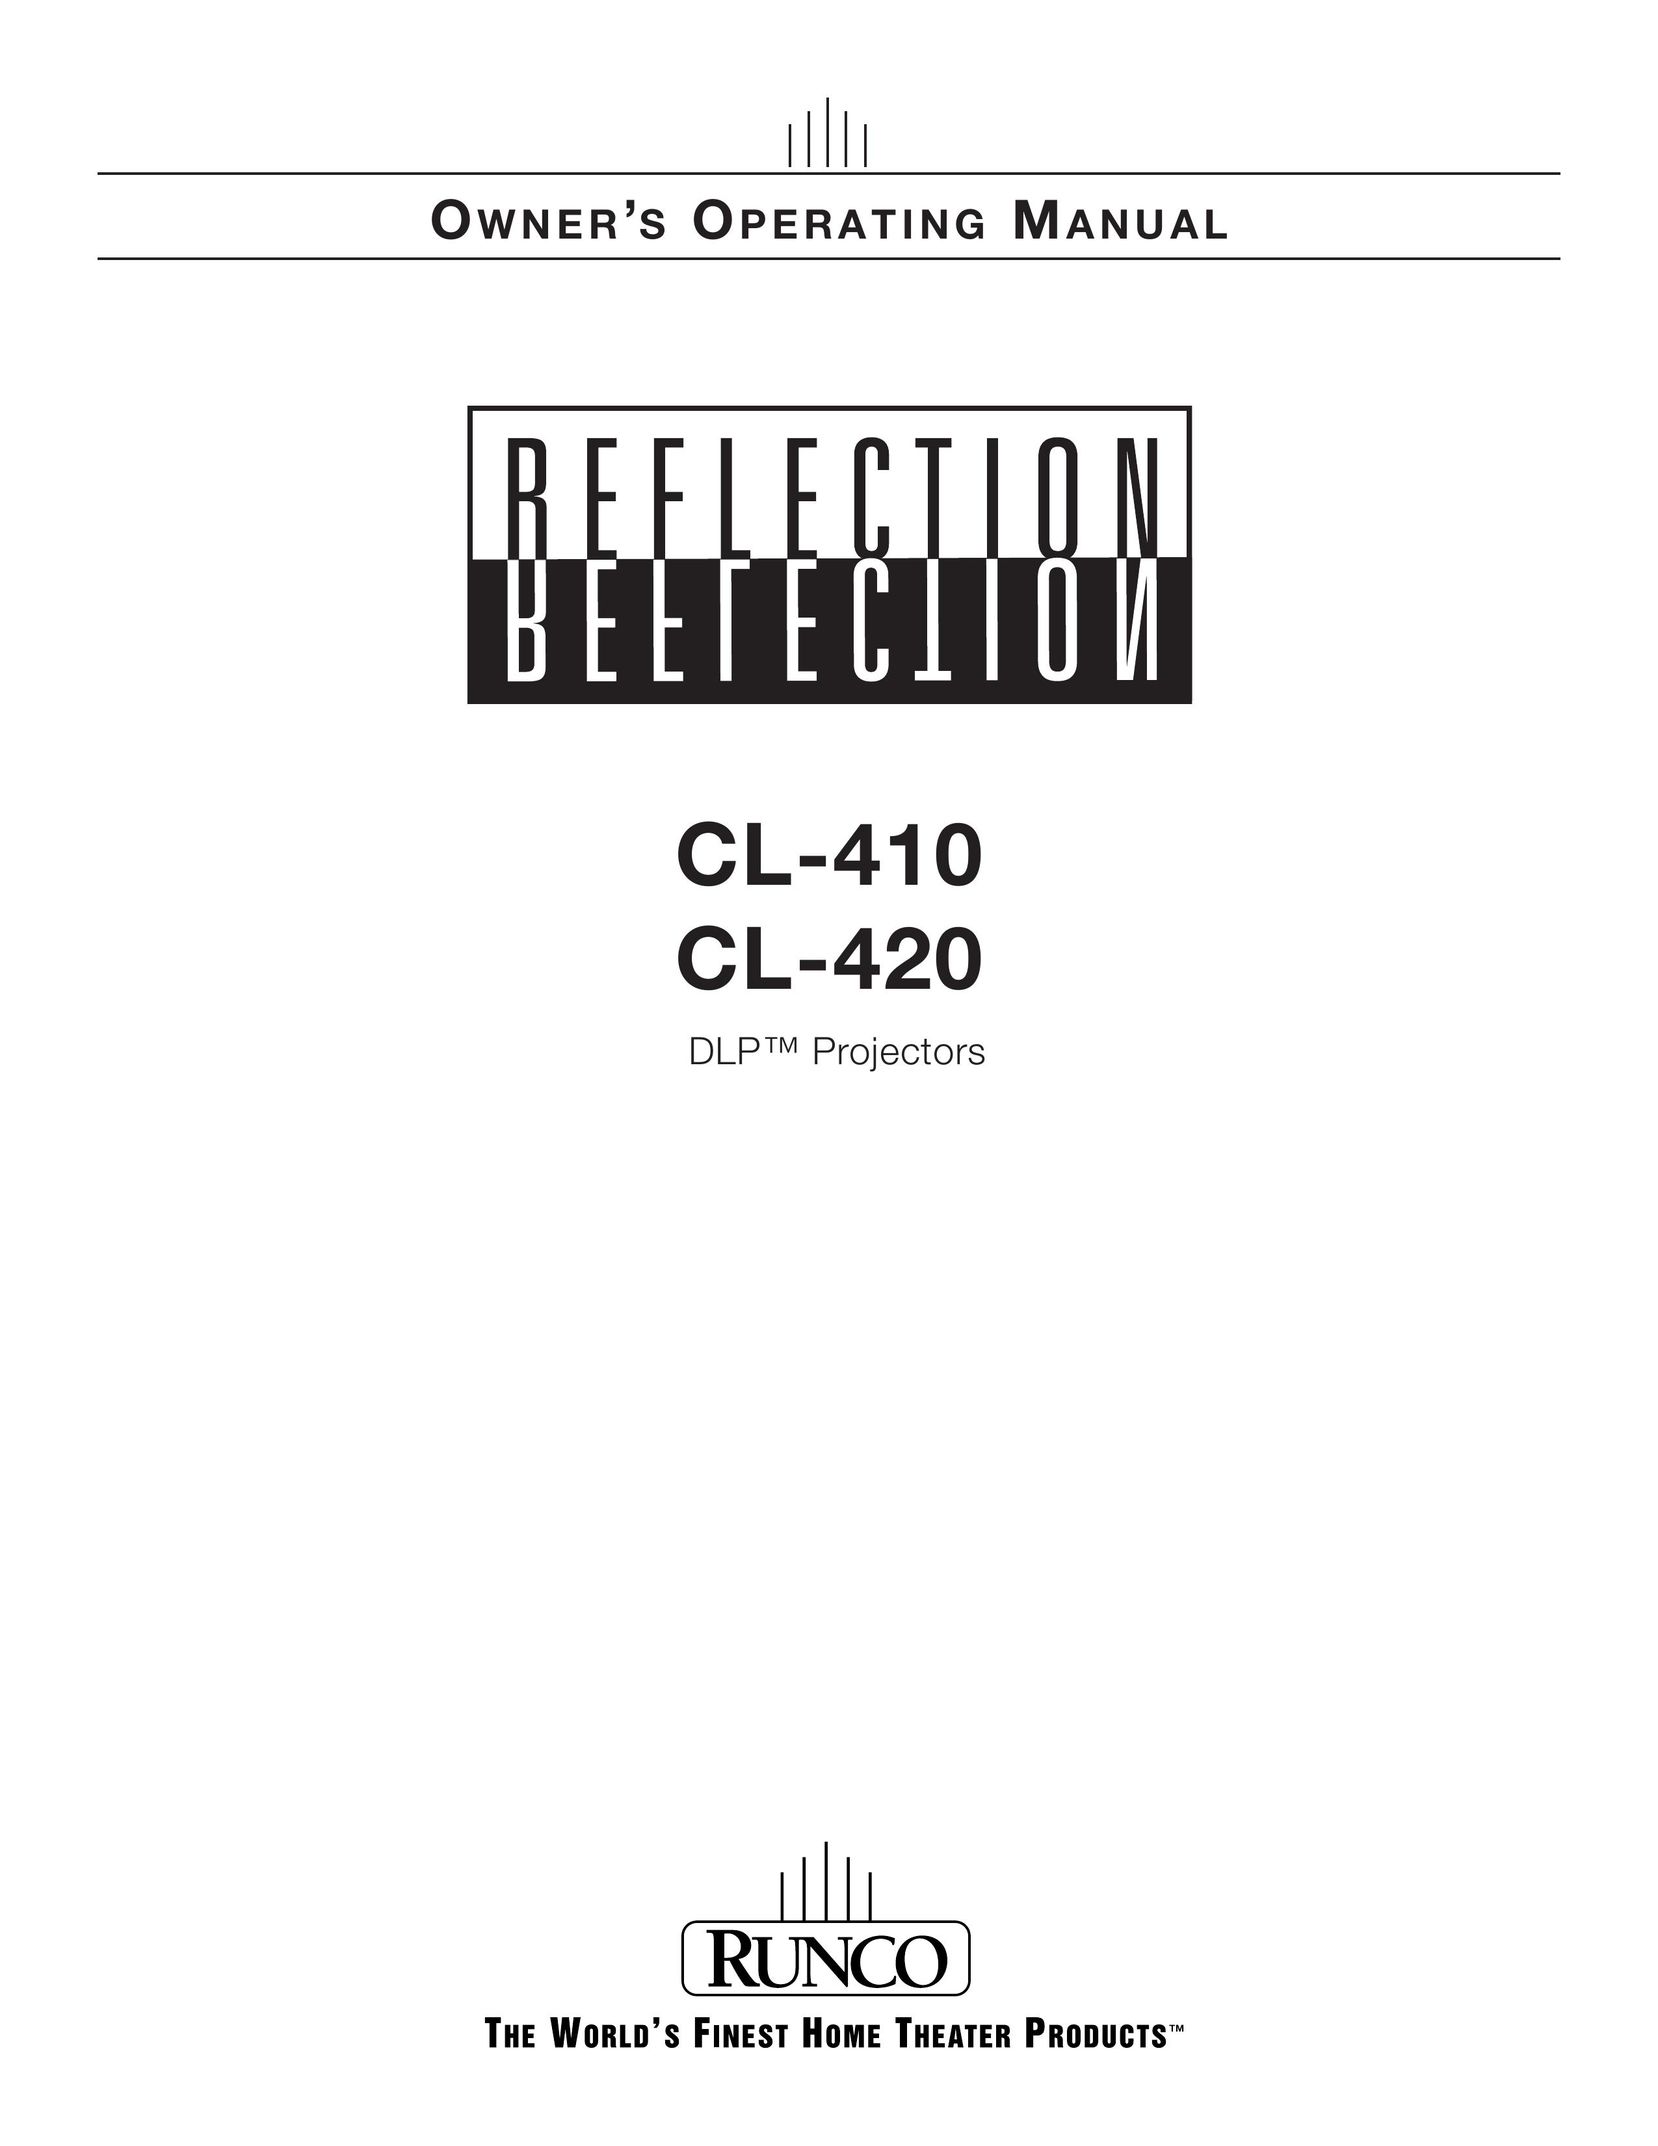 Runco Reflection Projector User Manual